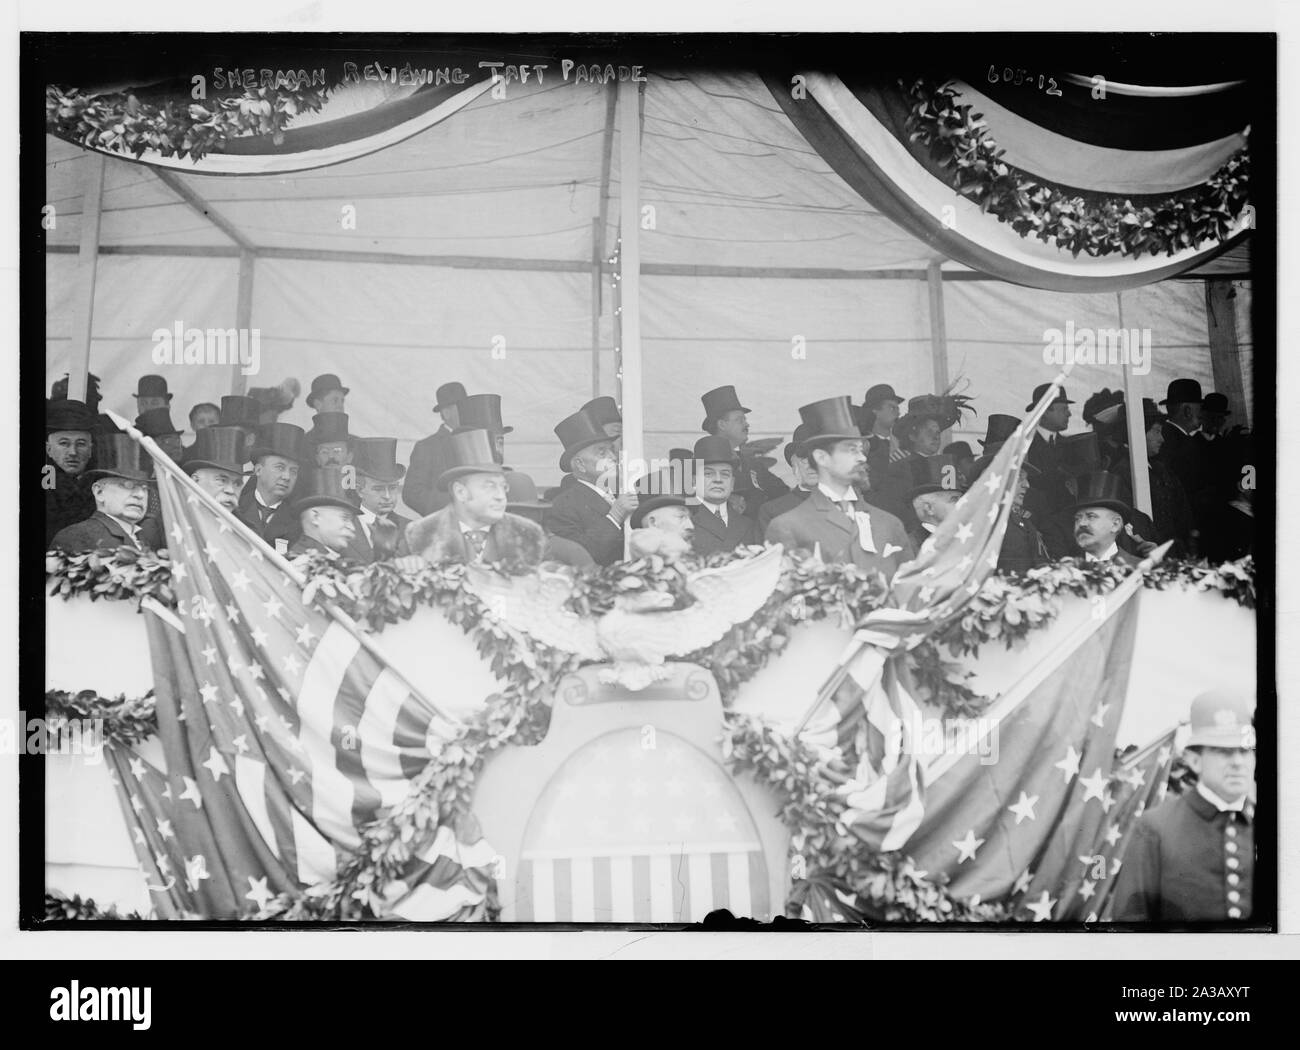 Sherman reviewing Taft Parade (New York) Stock Photo